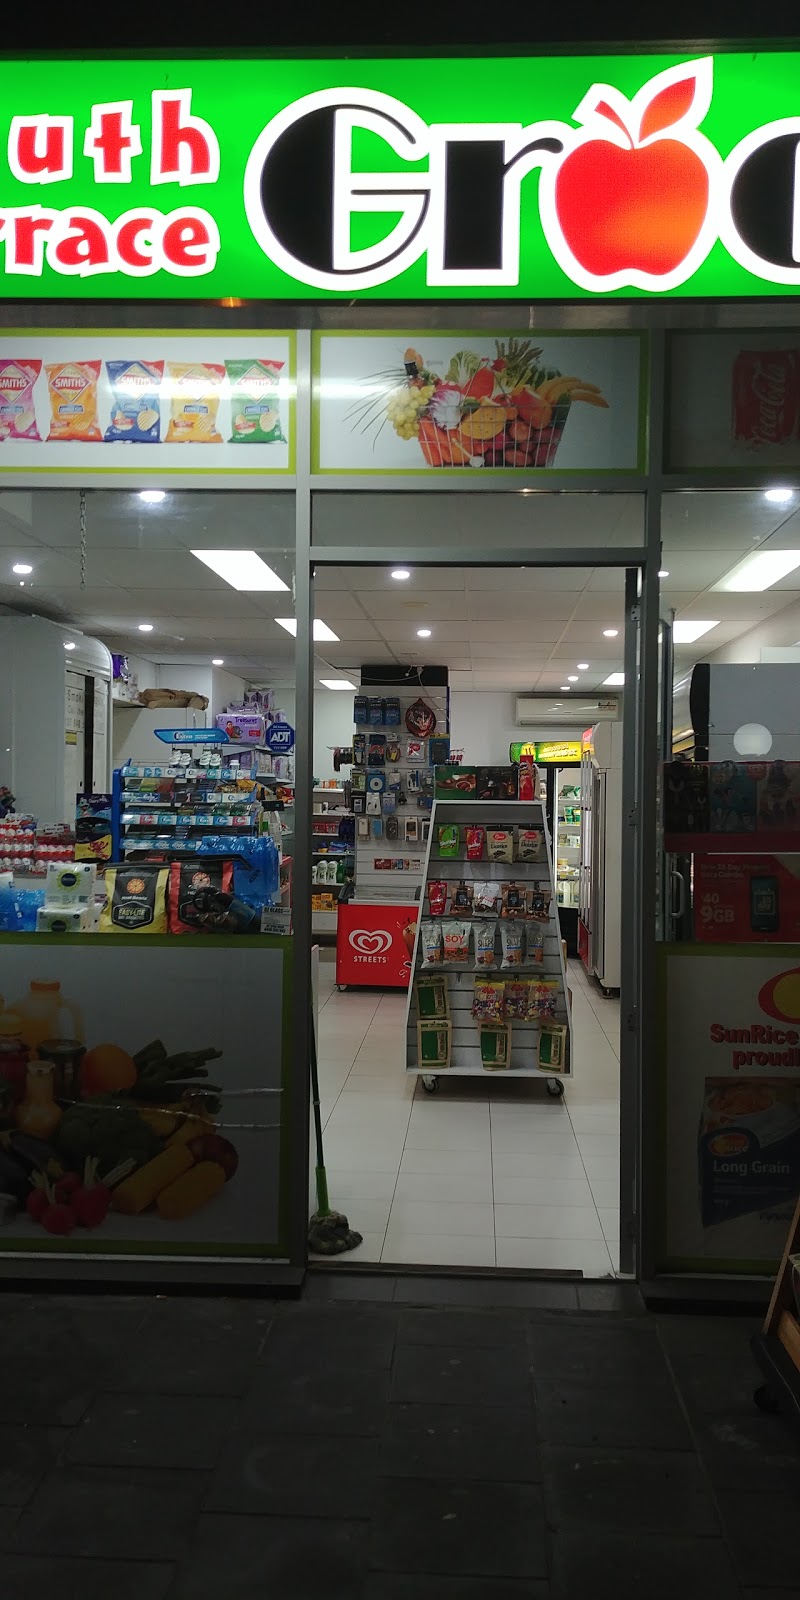 South Terrace Grocer | convenience store | shop 1/242 South Terrace, Bankstown NSW 2200, Australia